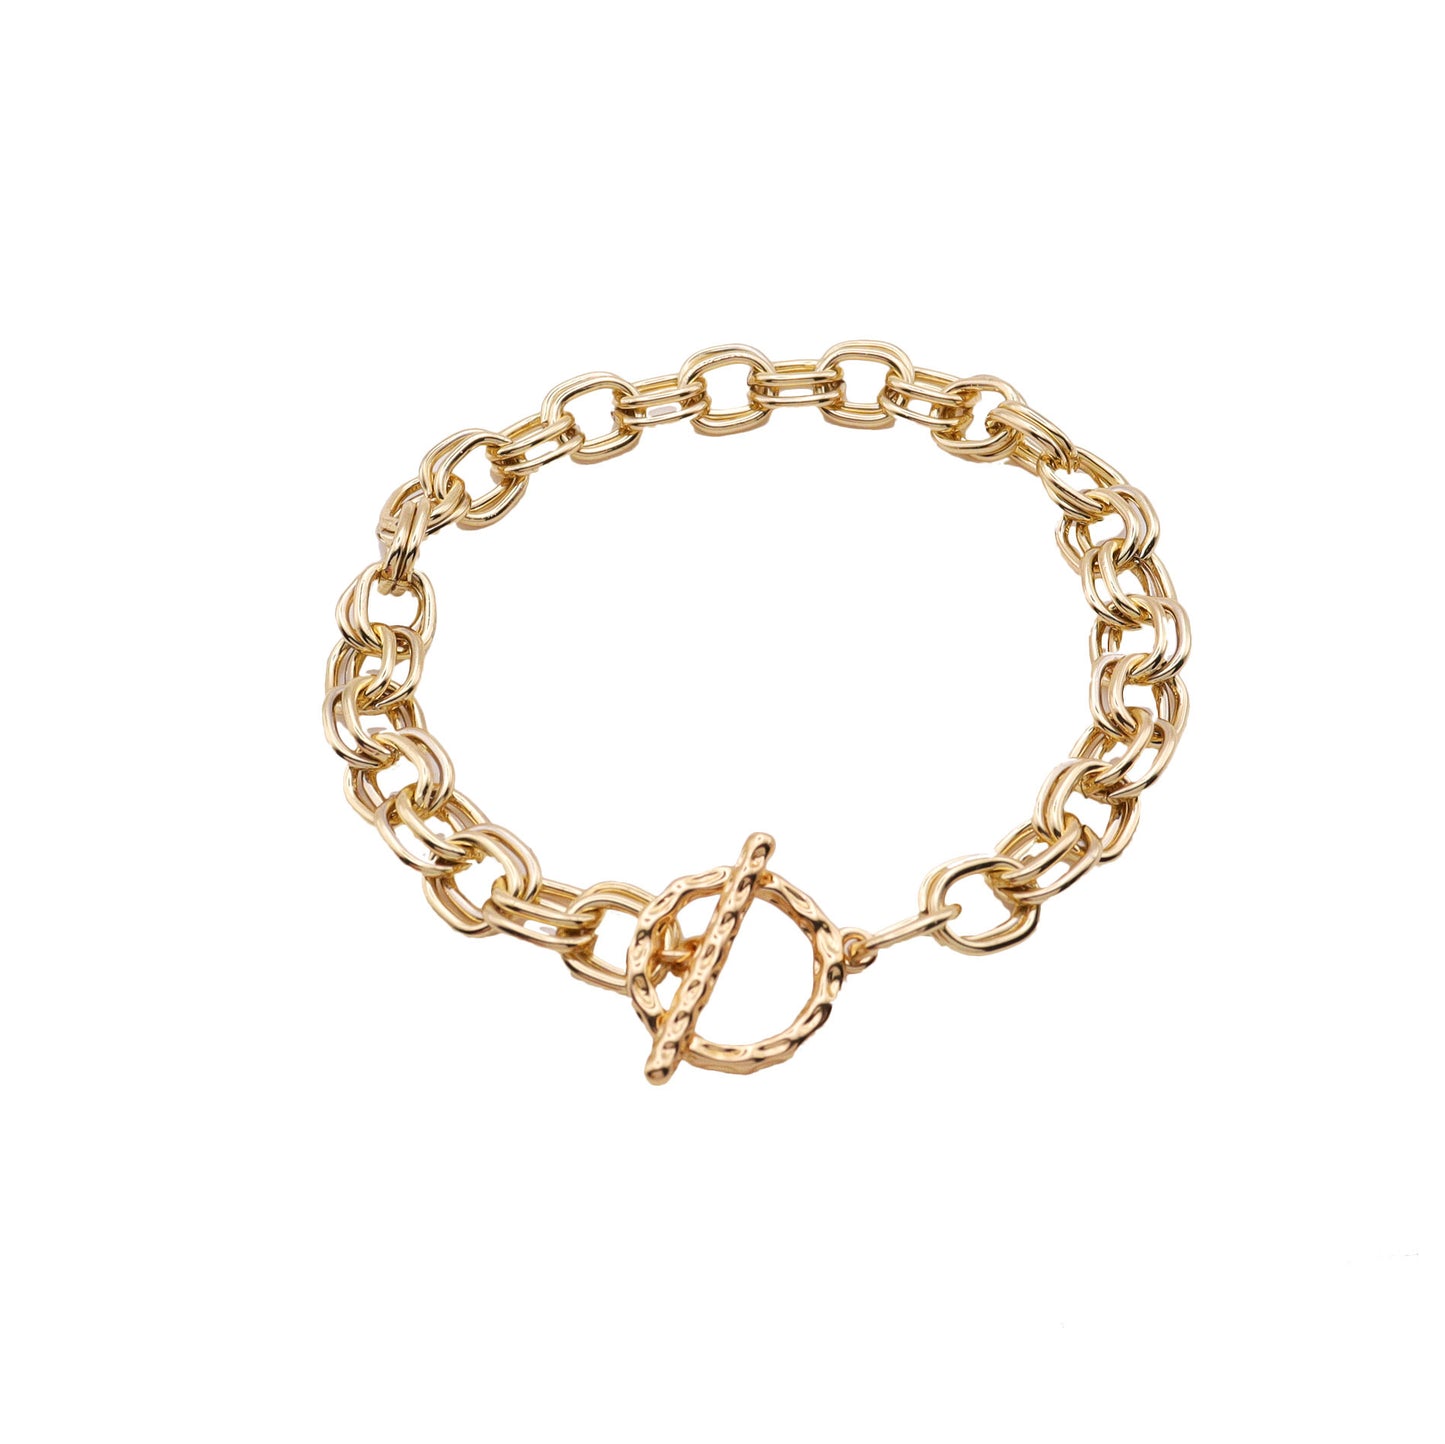 Go Wild Gold Chain Bracelet